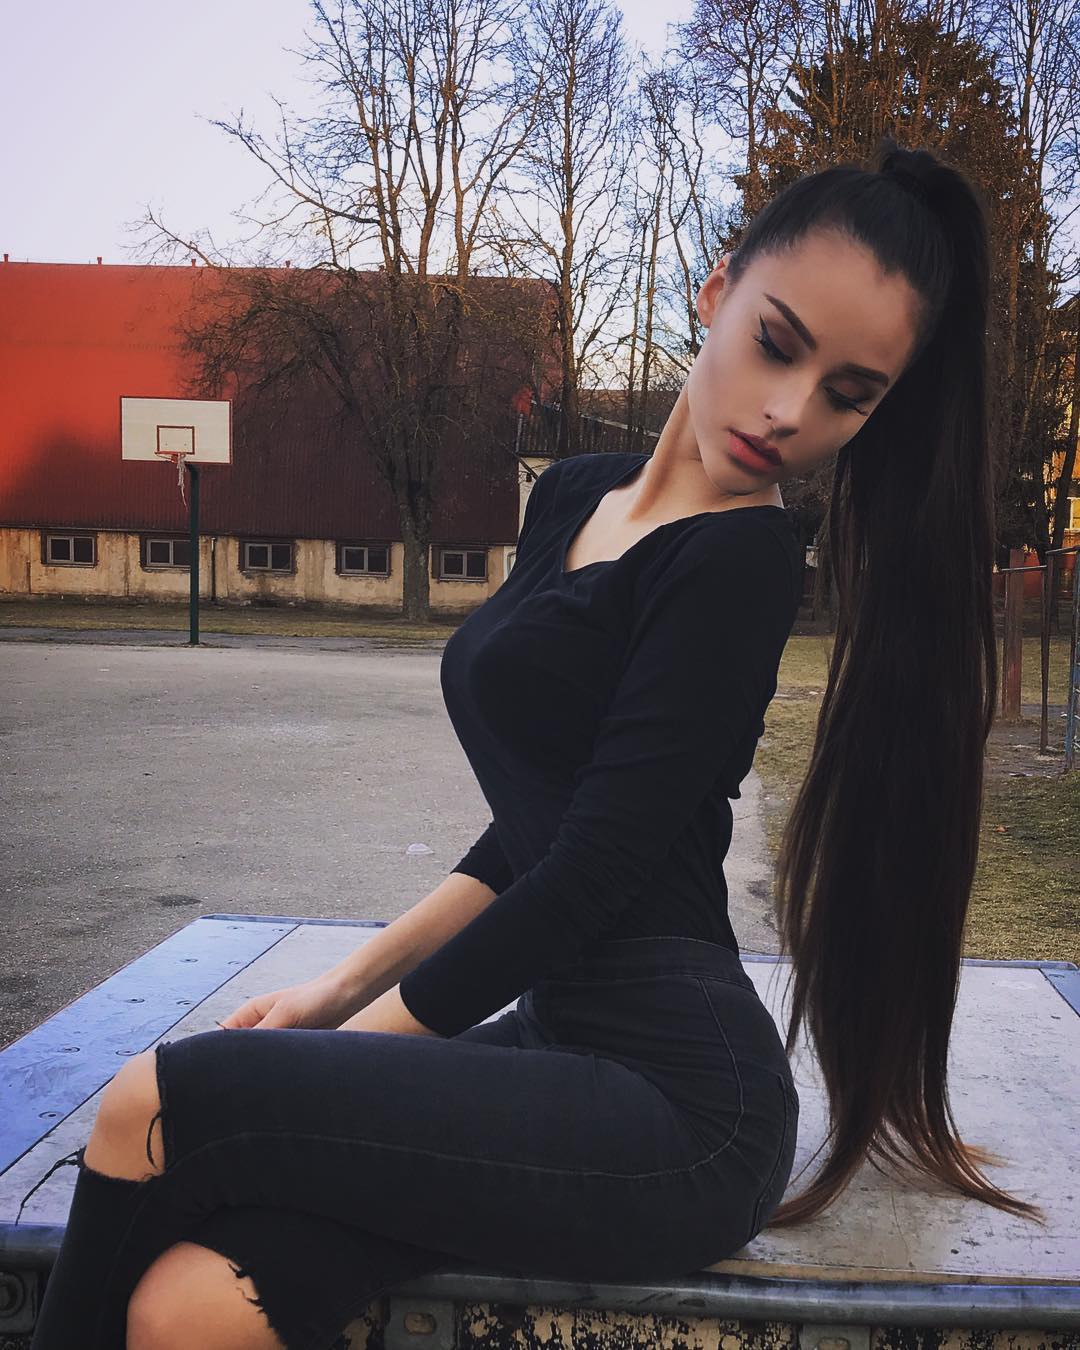 Viktorija jukonyte 15 фигура, волосы, тело, грудь, ноги, руки